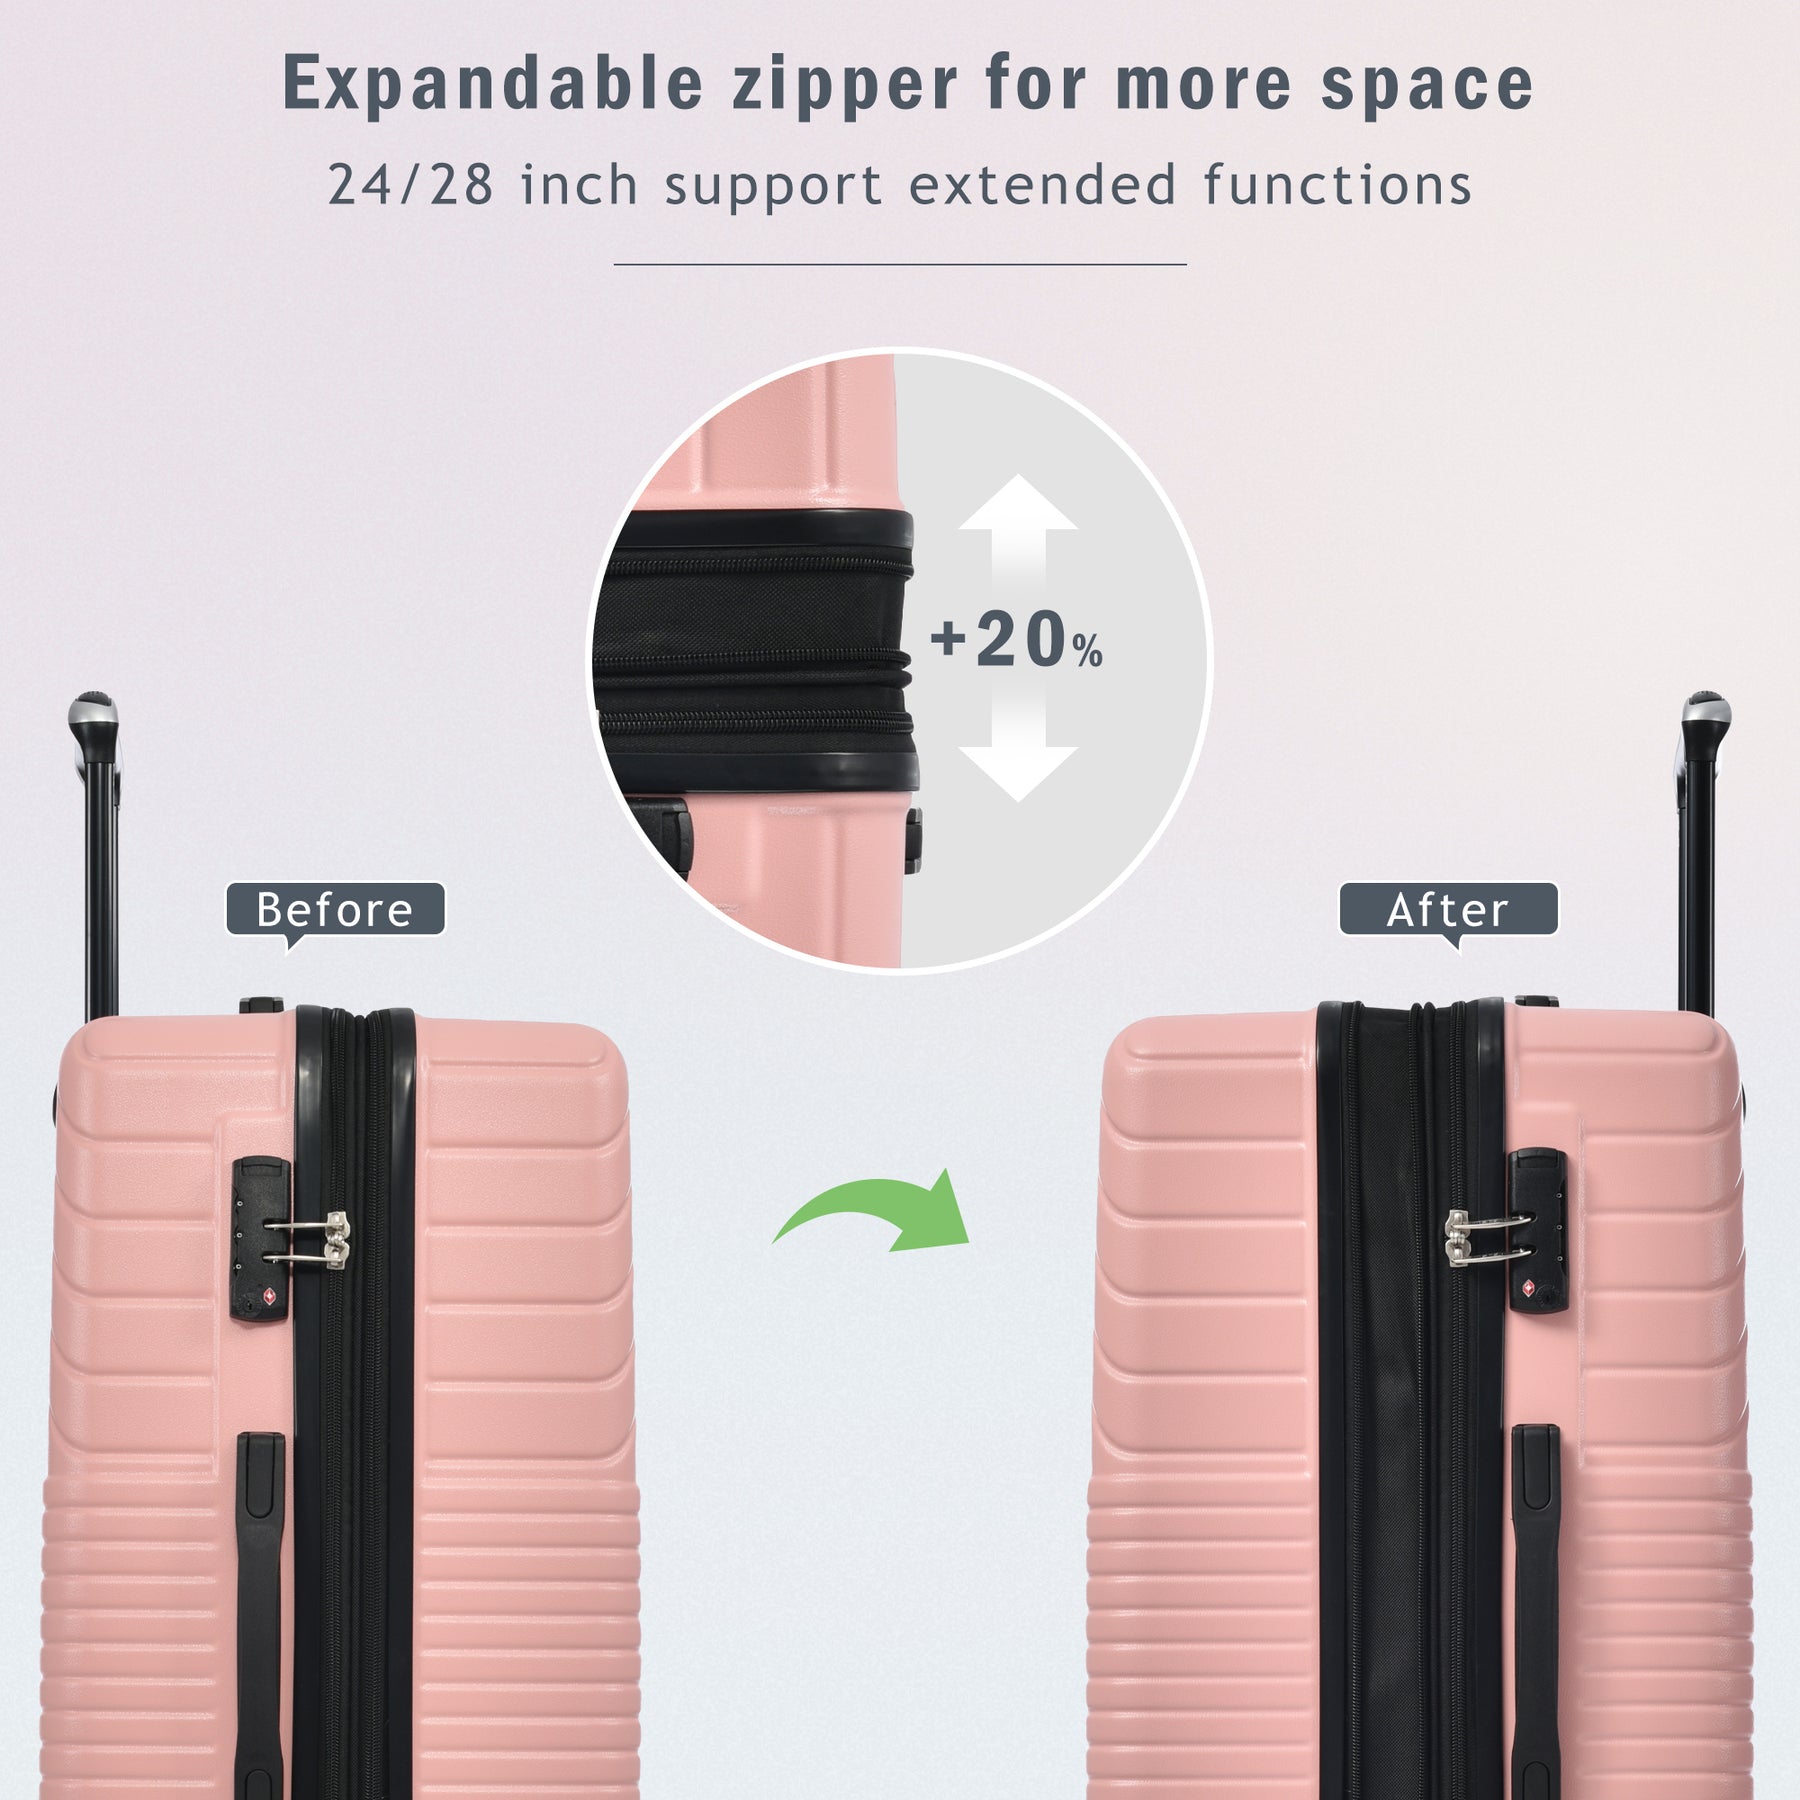 Hardshell Luggage Sets 3 Piece double spinner 8 wheels Suitcase with TSA Lock Lightweight 20''24''28'' - Tonkn